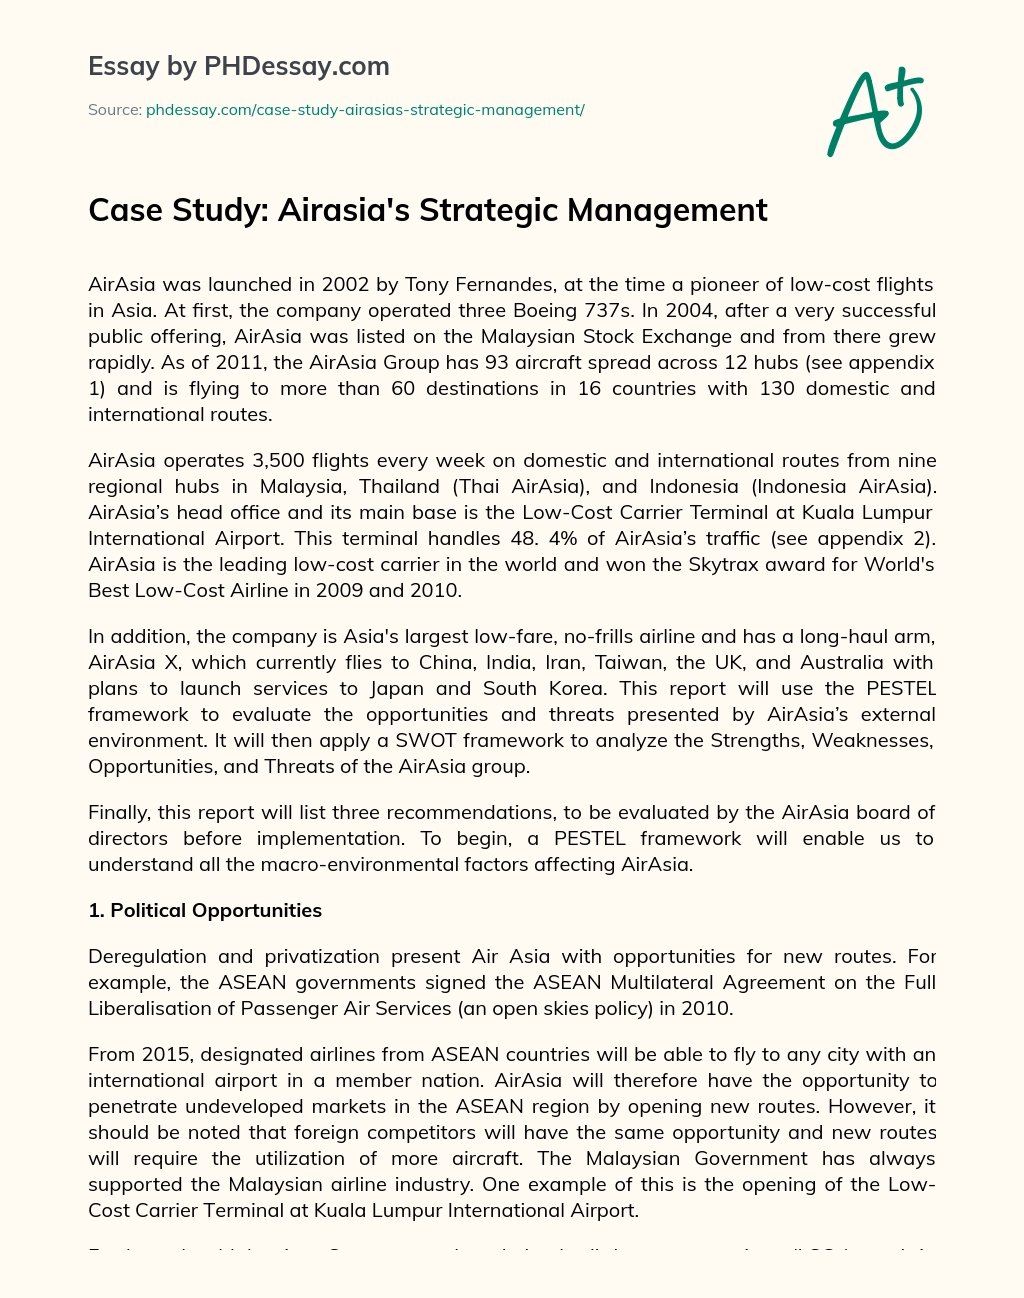 Case Study: Airasia’s Strategic Management essay